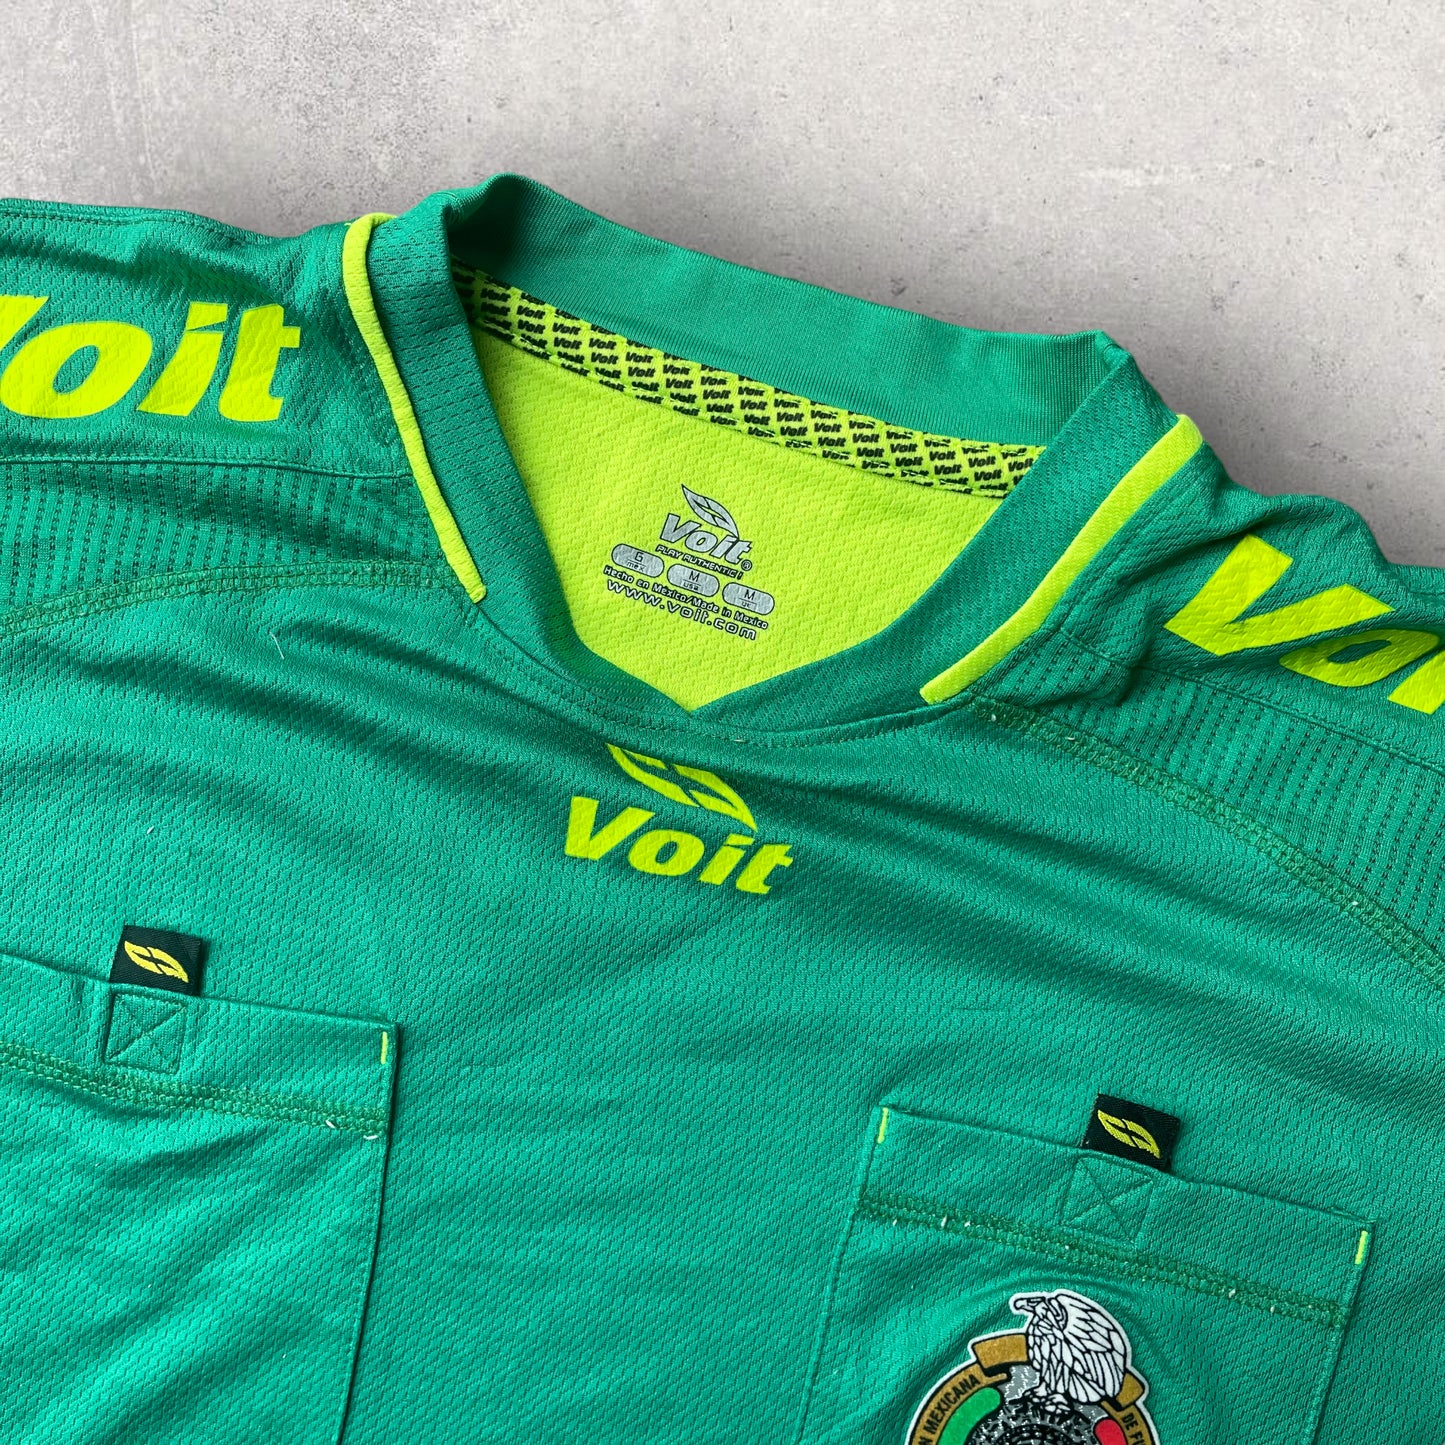 Retro Voilt Mexico SK Football Jersey - Medium